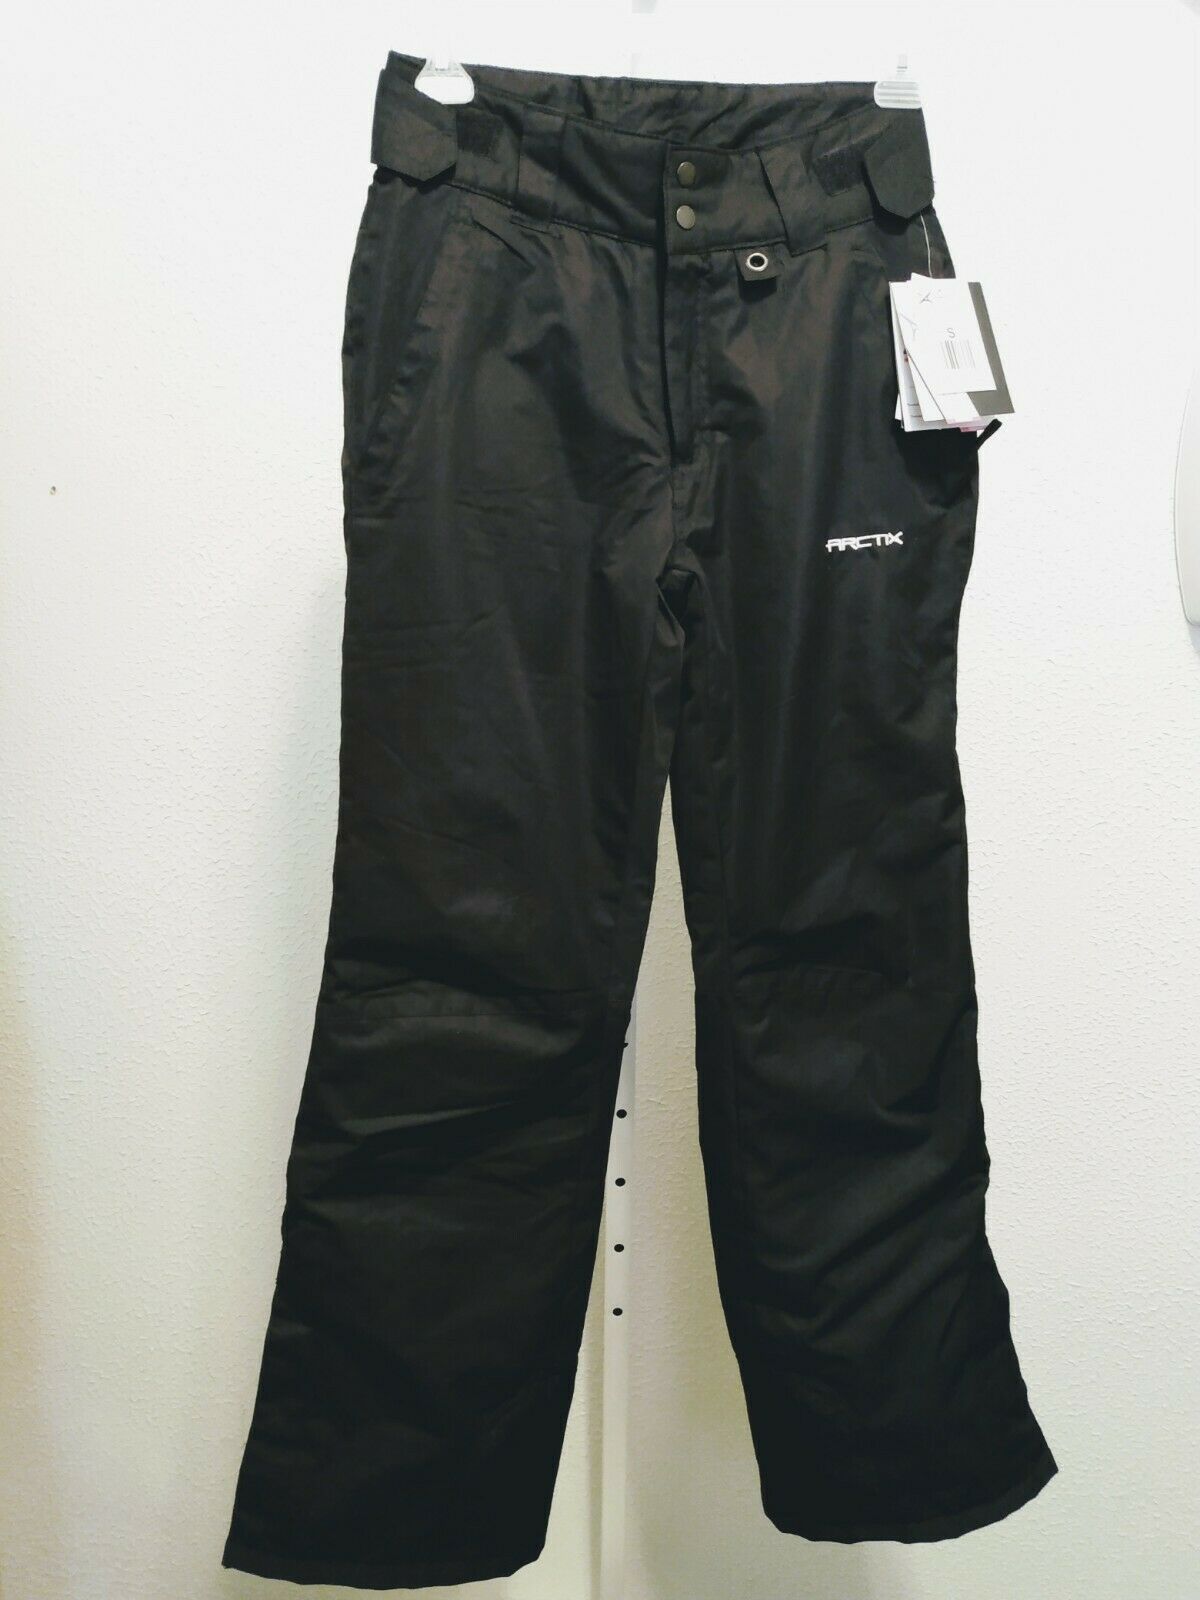 Women's Arctix Black Snow Ski Pants Zip Pockets Size S -20 F - 35 Nwt 1800-00 S